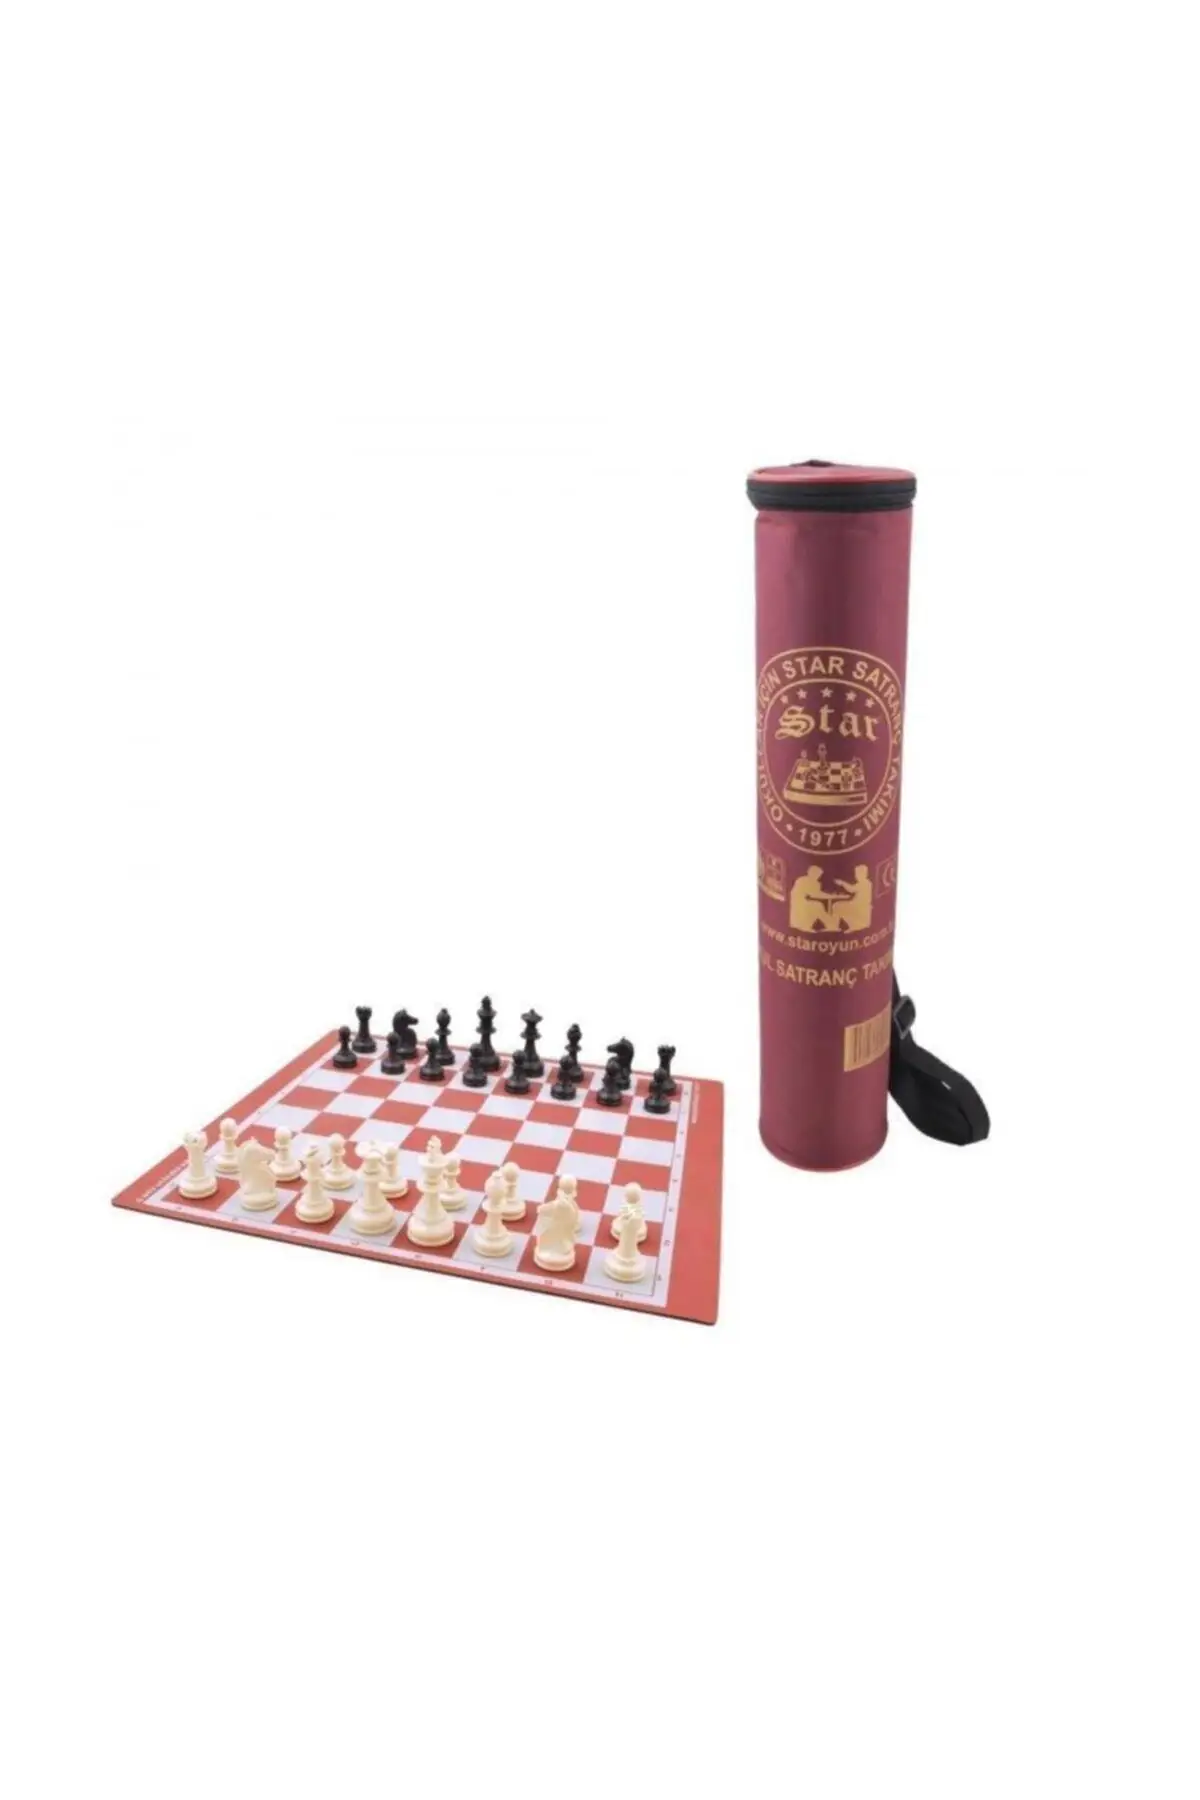 Star School Chess Set 1050019